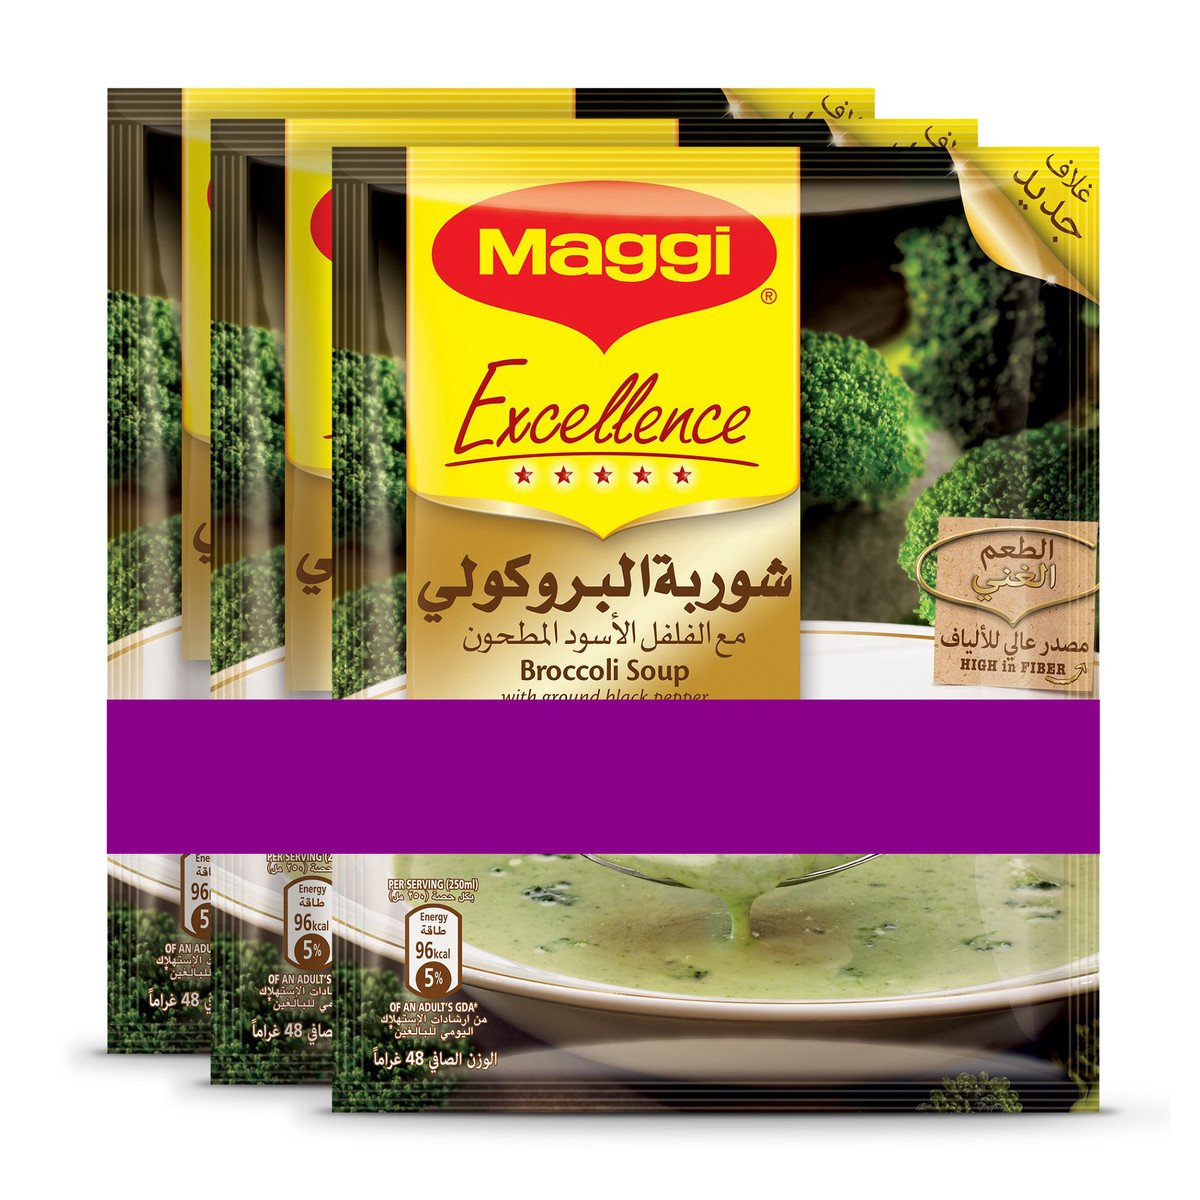 Maggi Excellence Broccoli Soup 3 x 48g